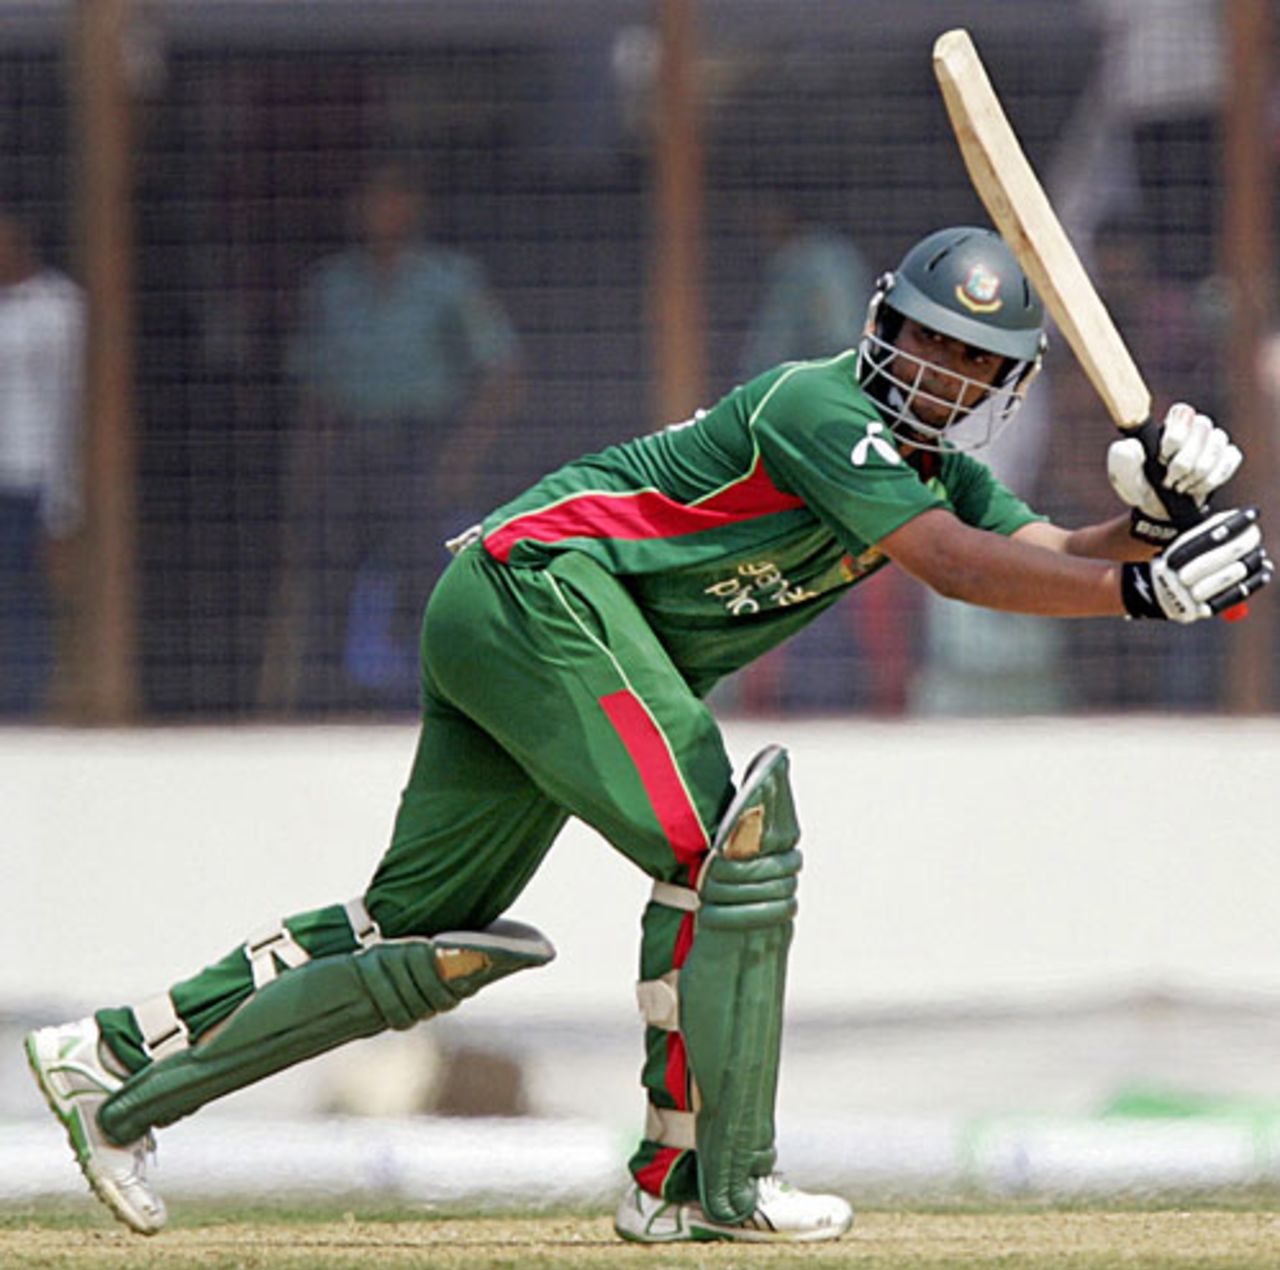 Tamim Iqbal flicks behind square leg, Bangladesh v South Africa, 1st ODI, Chittagong, March 9, 2008